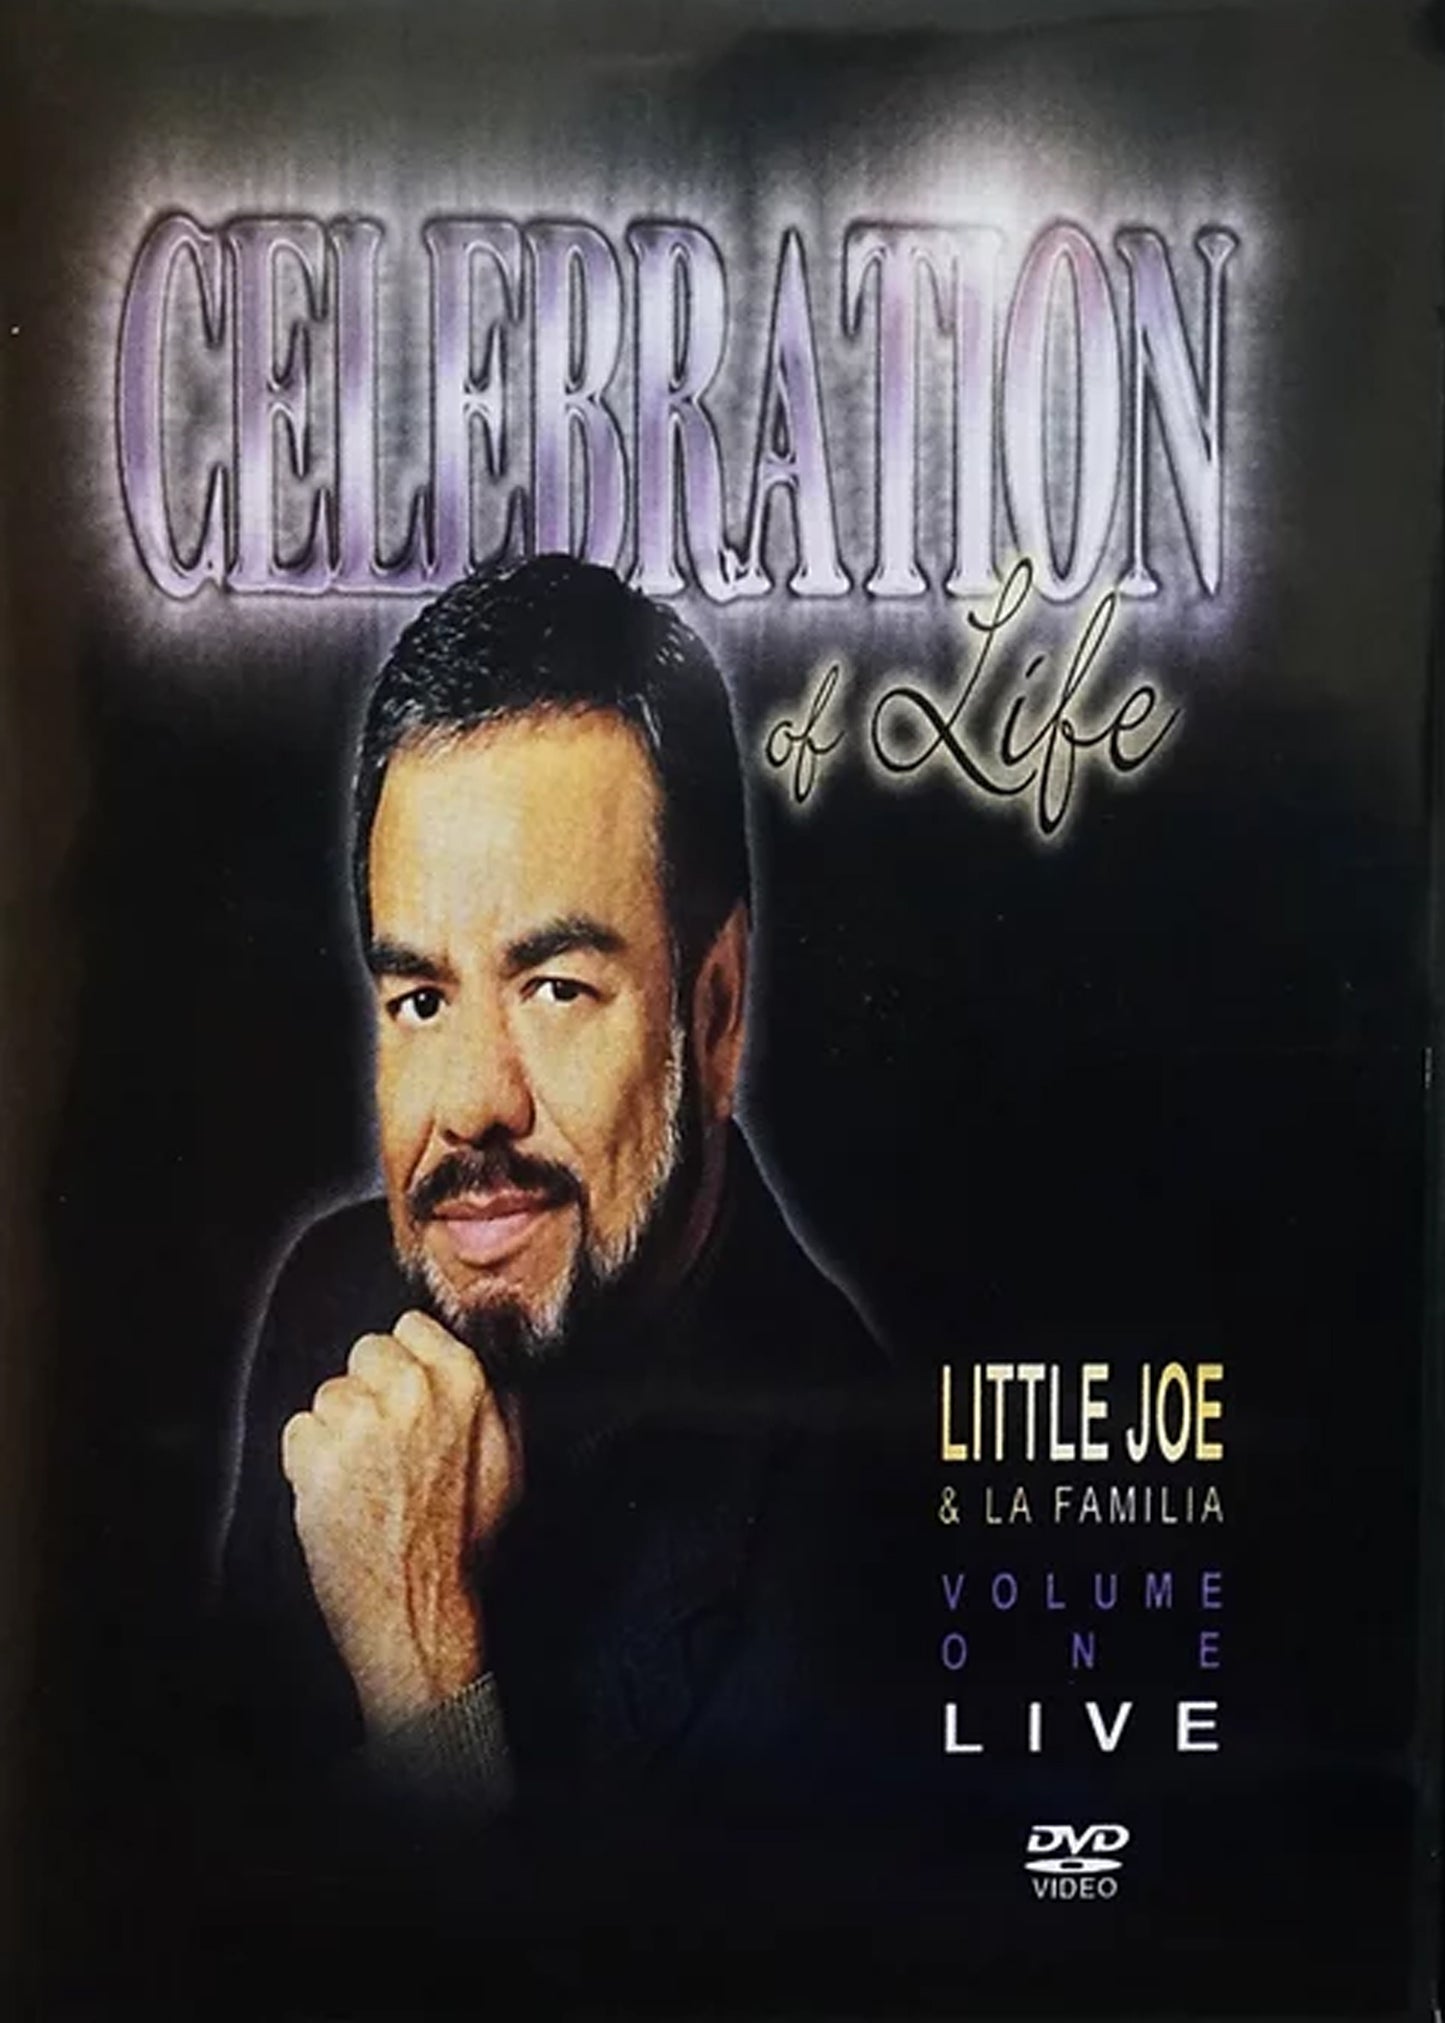 Little Joe Y La Familia - Celebration of Life Vol. 1 (DVD)